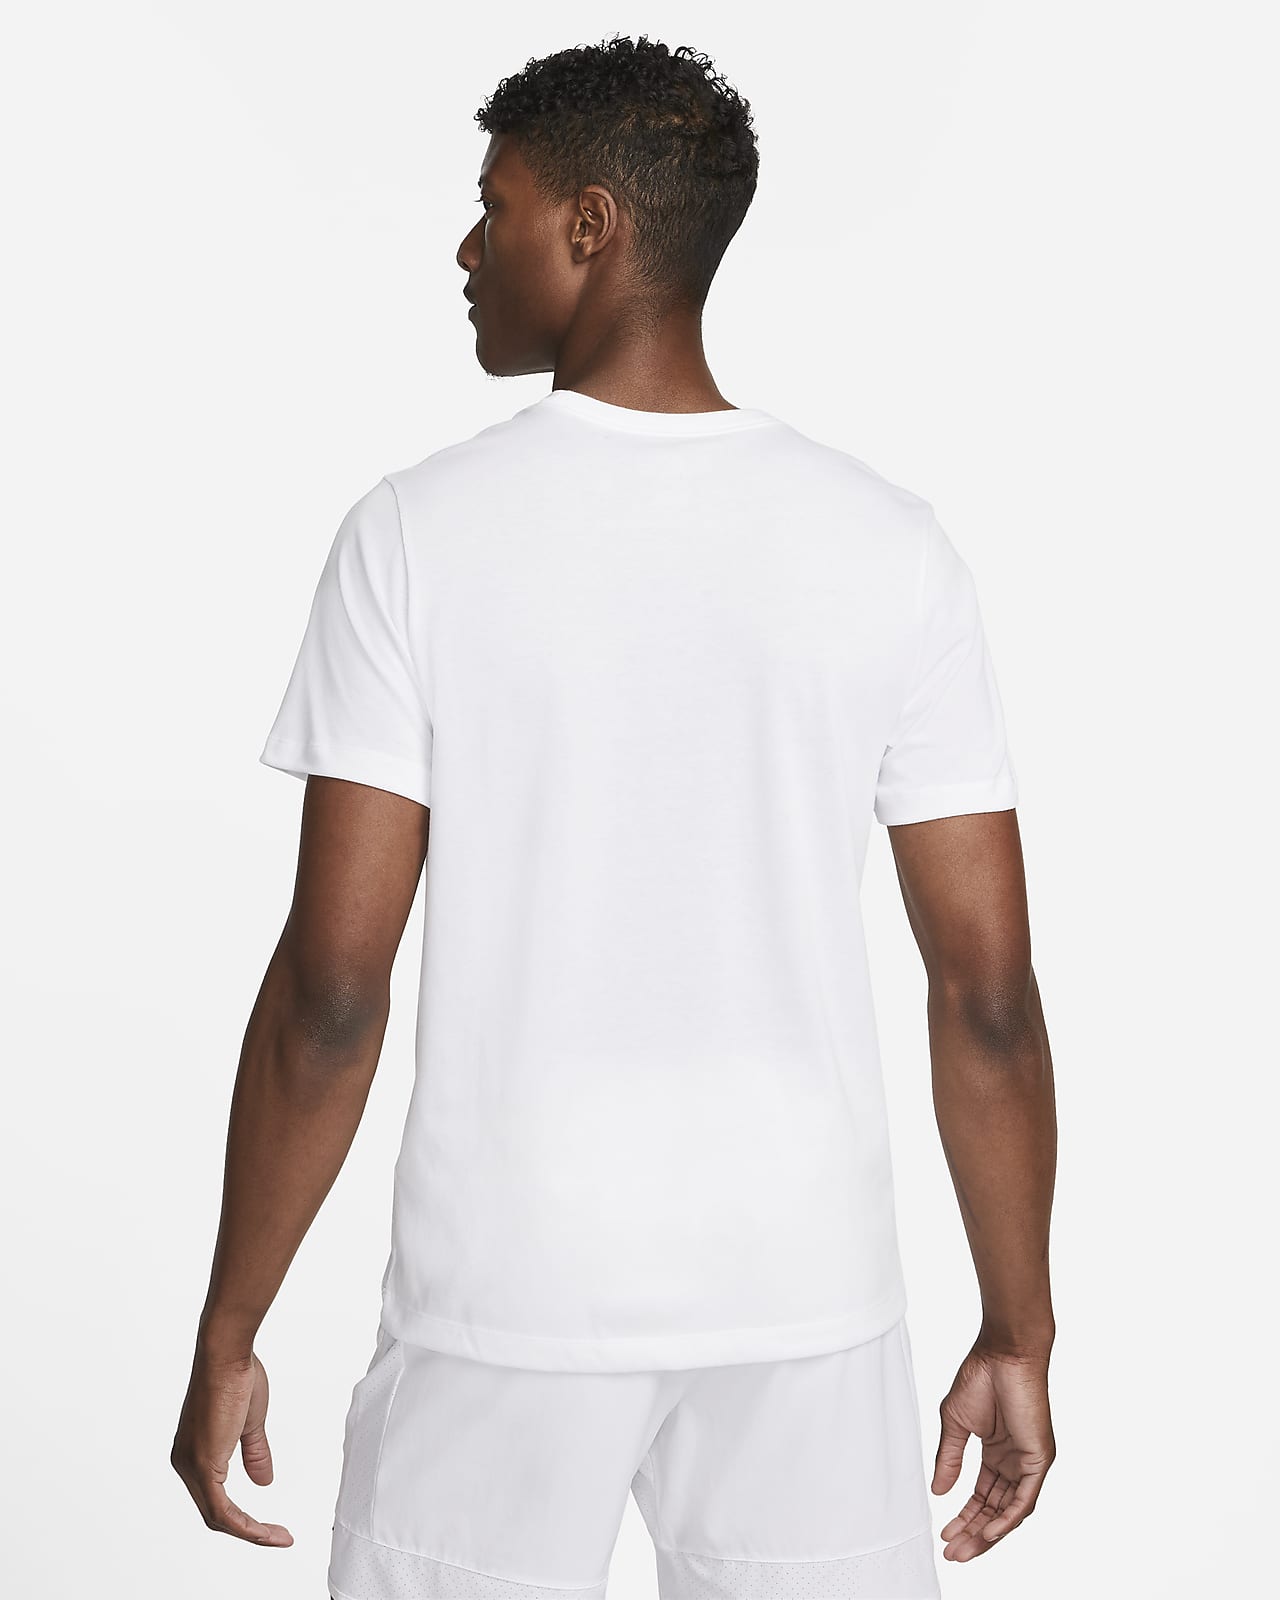 NikeCourt Rafa Camiseta de tenis - Nike ES